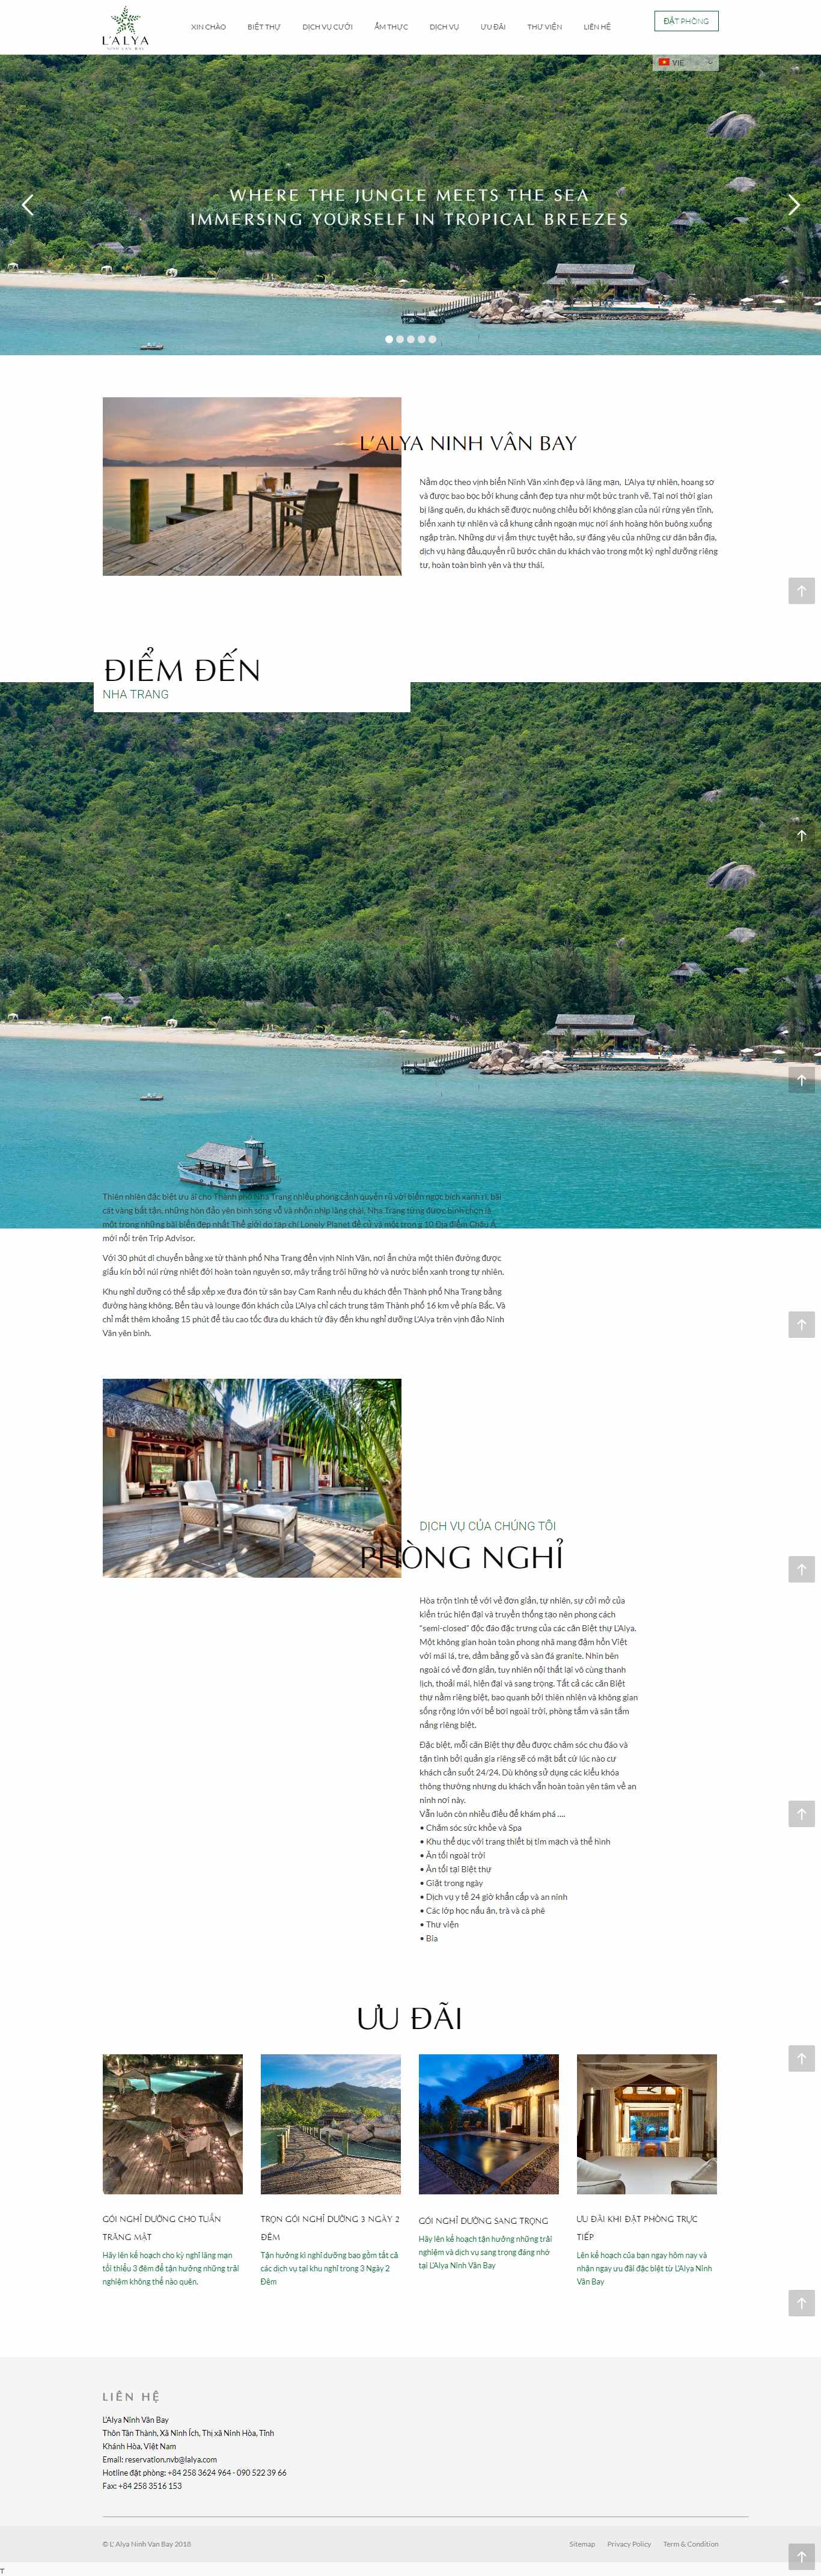 Thiết kế Website resort - lalyana.com